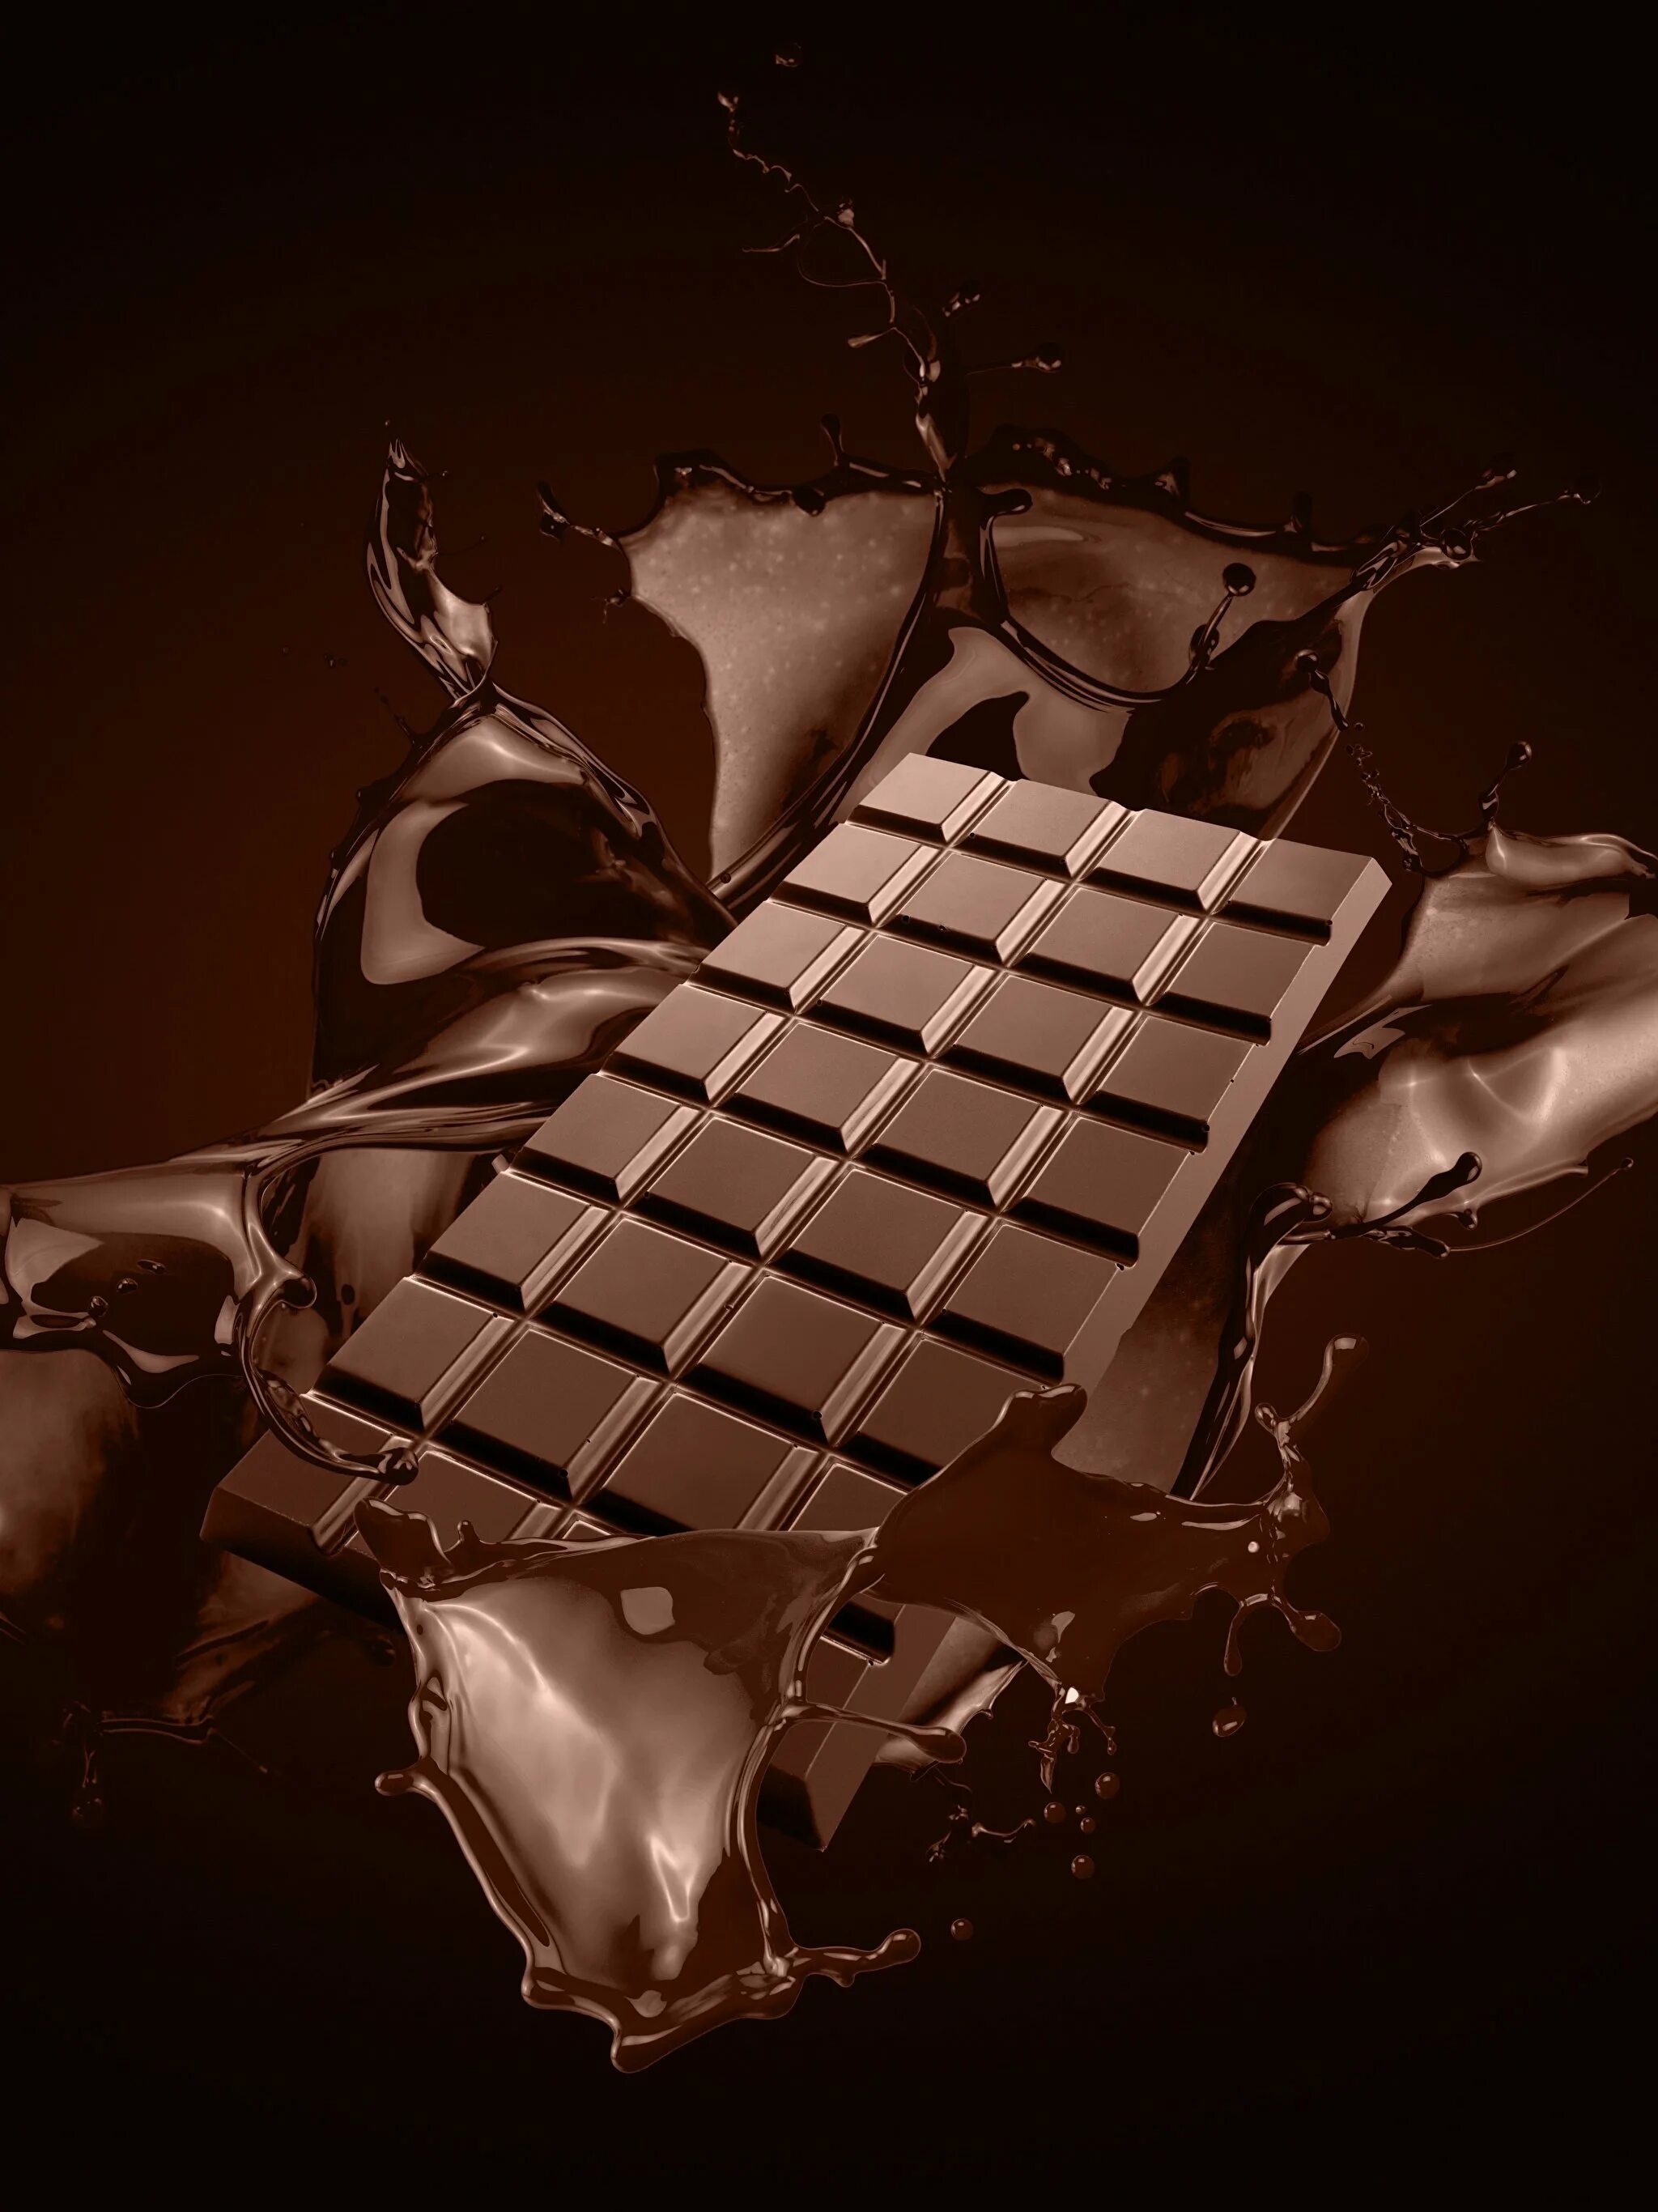 Тема шоколад. Брызги шоколада. Плитка шоколада. Обои на телефон шоколад. Шоколад фон.